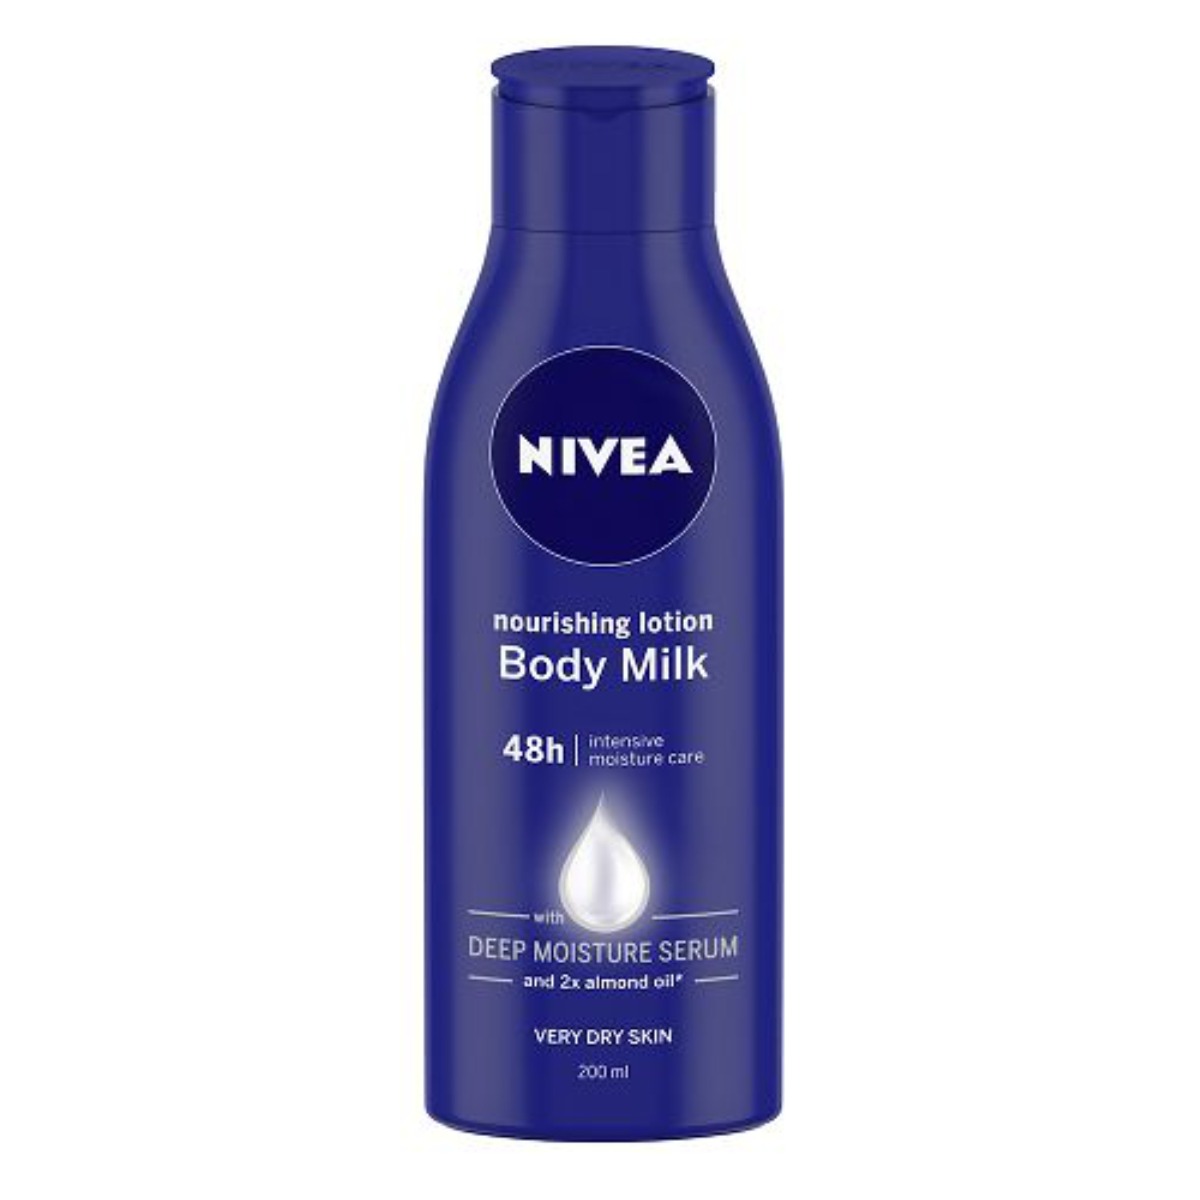 Nivea body lotion for very dry skin, nourising body milk, 200ml